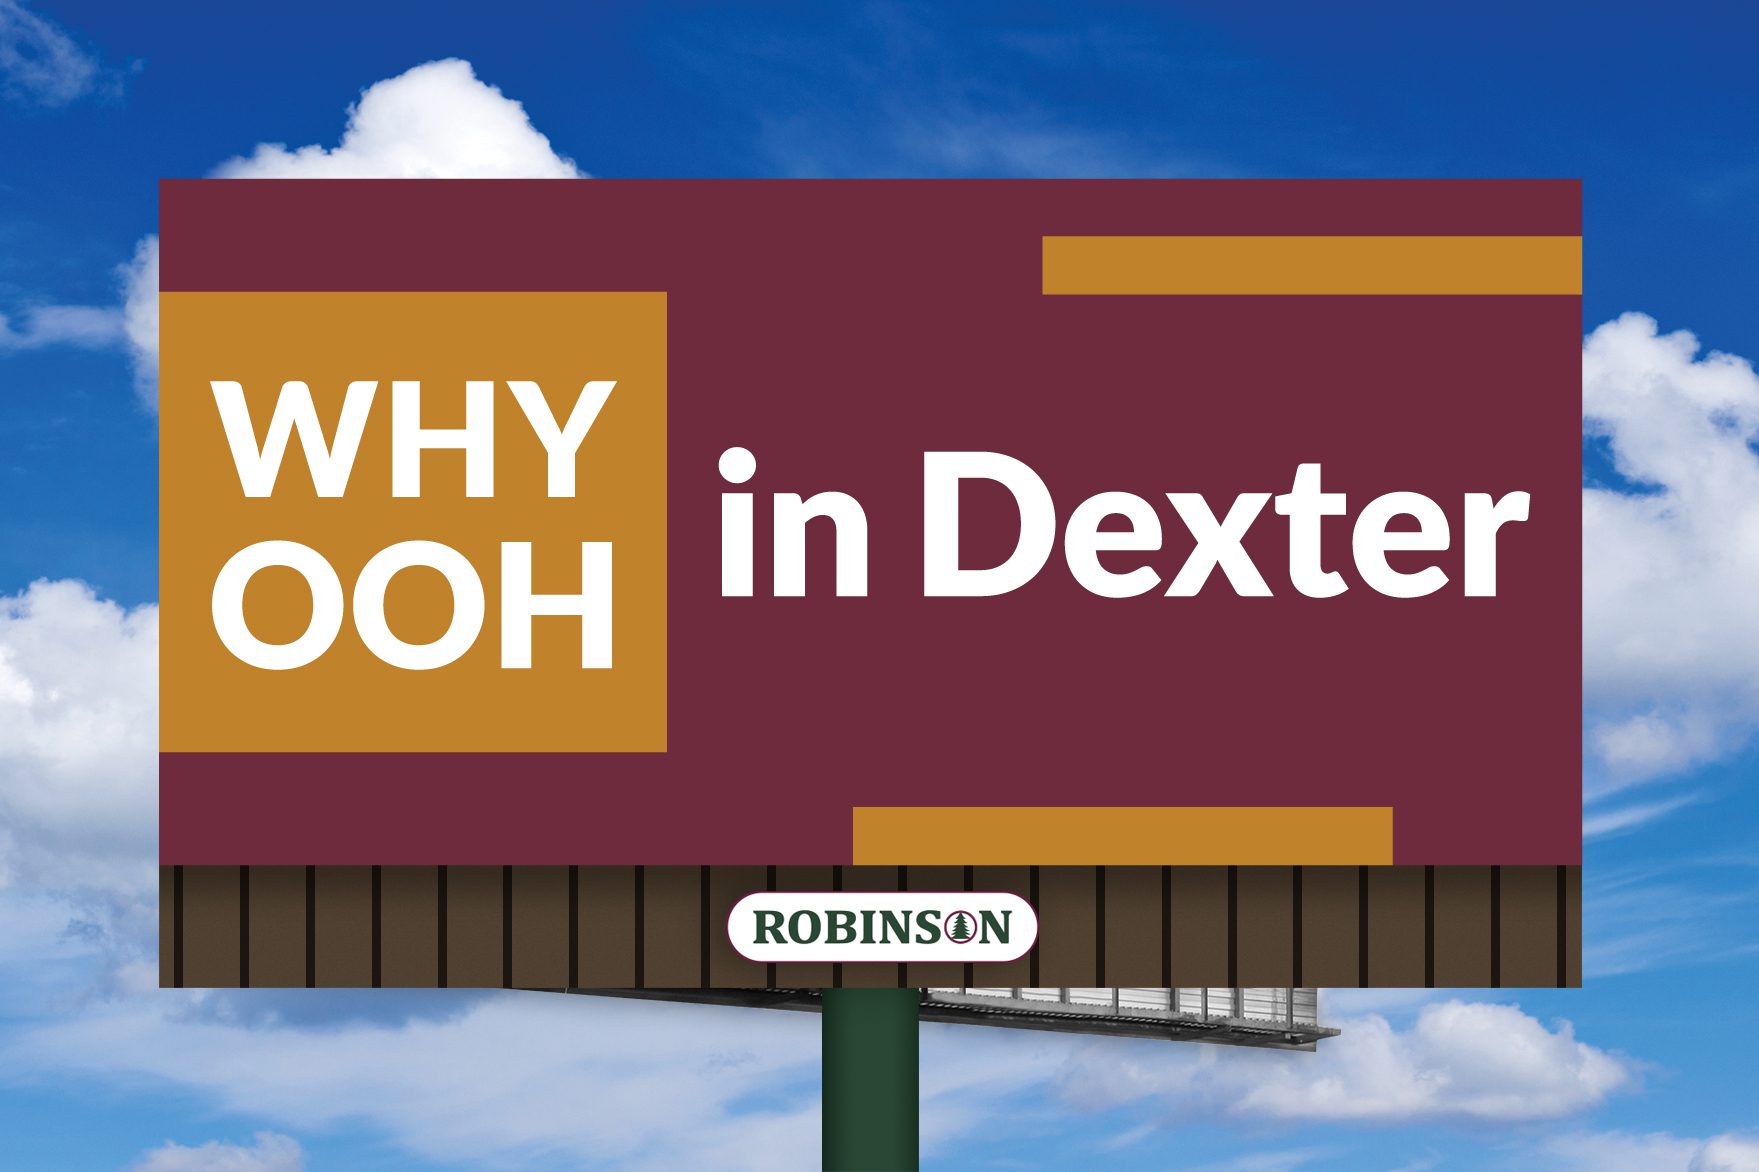 Dexter, Missouri digital billboard advertising